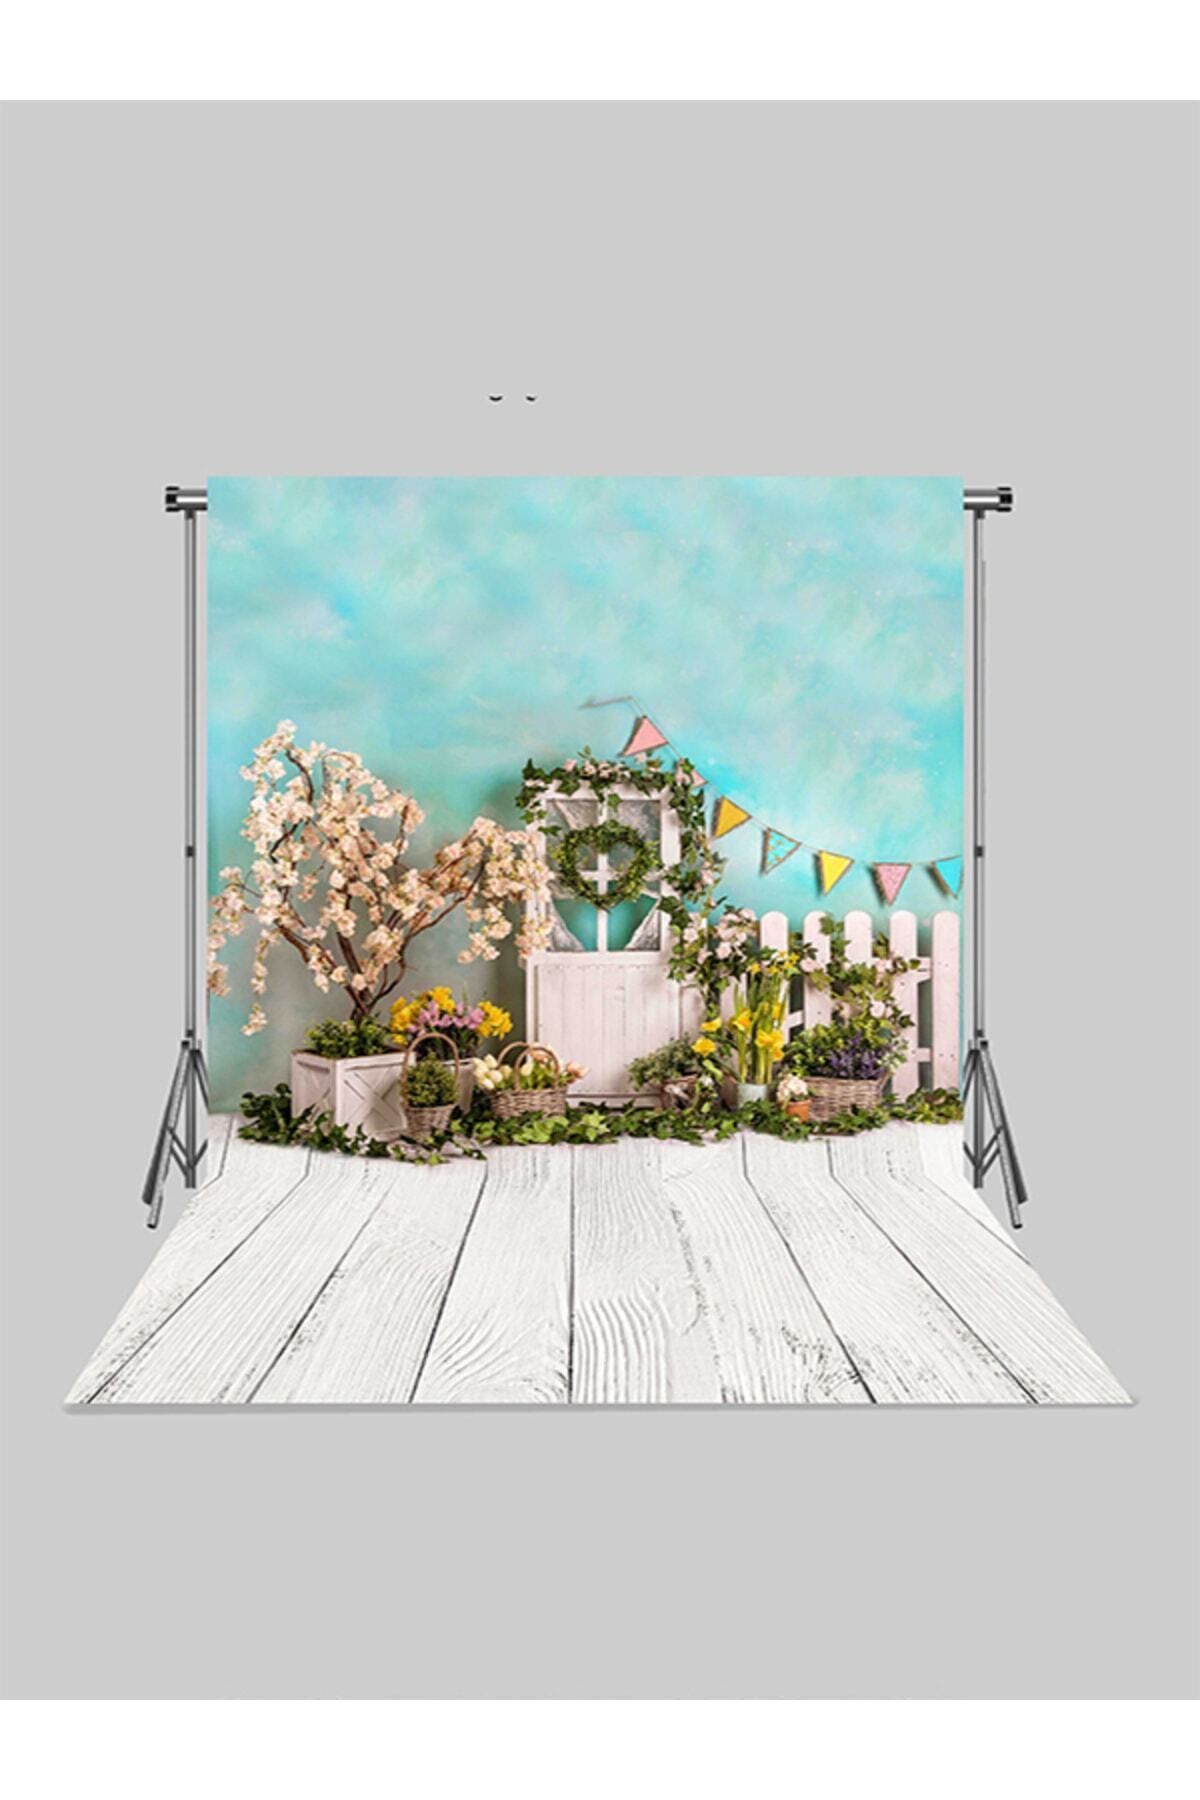 FONHANE 2x2.5 m Kumaş Üç Boyutlu Çocuk Fotoğraf Stüdyo Fonu Bahar Çiçekli Ahşap Kapı